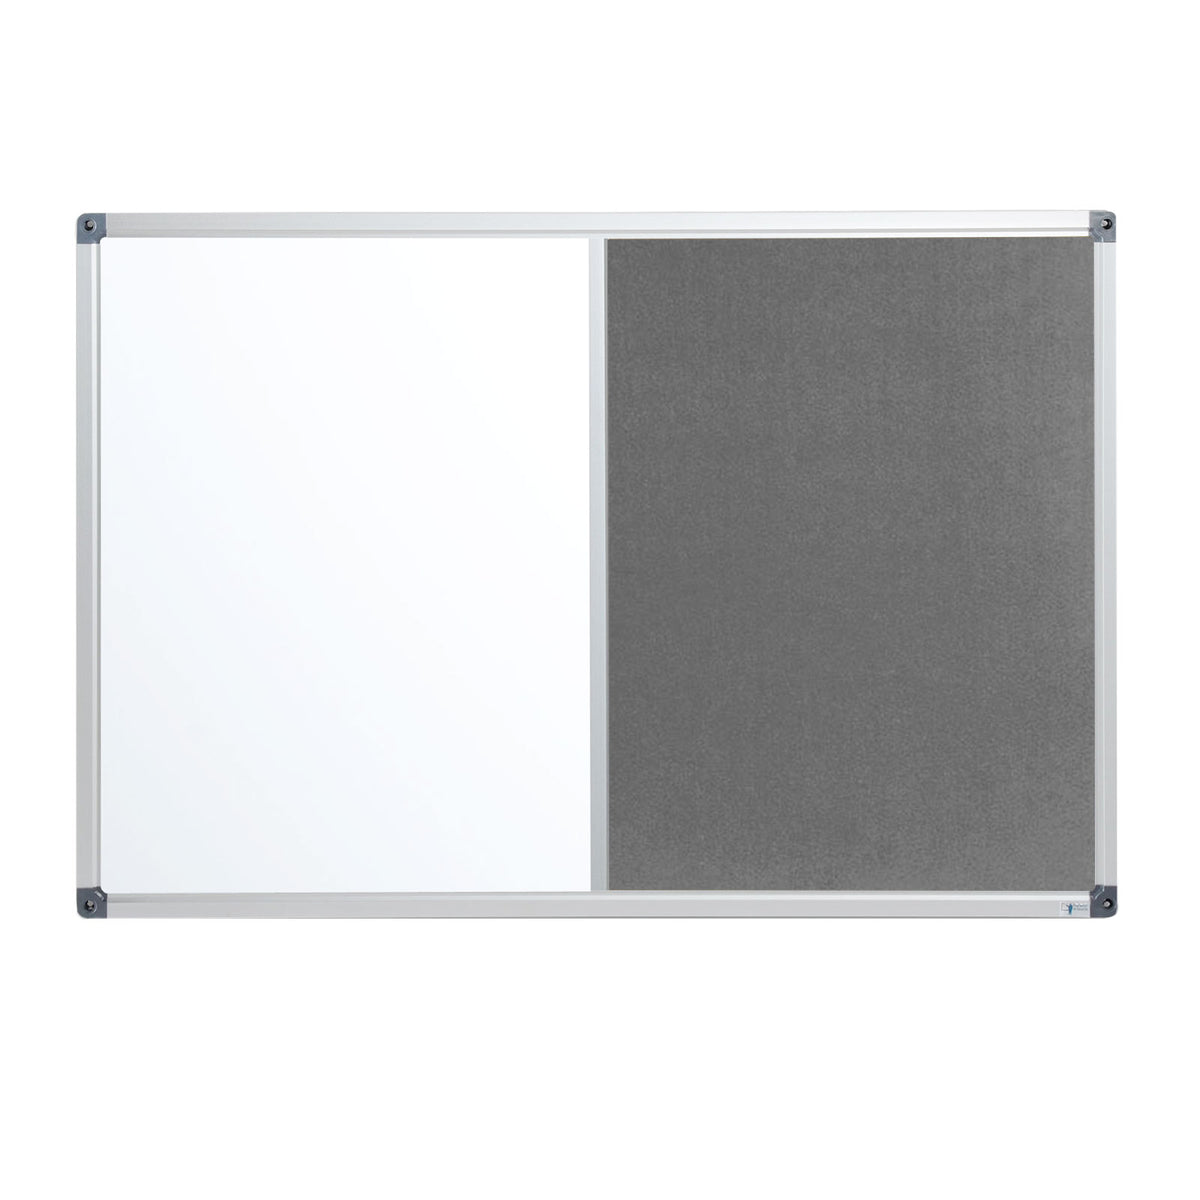 Kombitafel Whiteboard & Filzwand 2 Größen | Grau